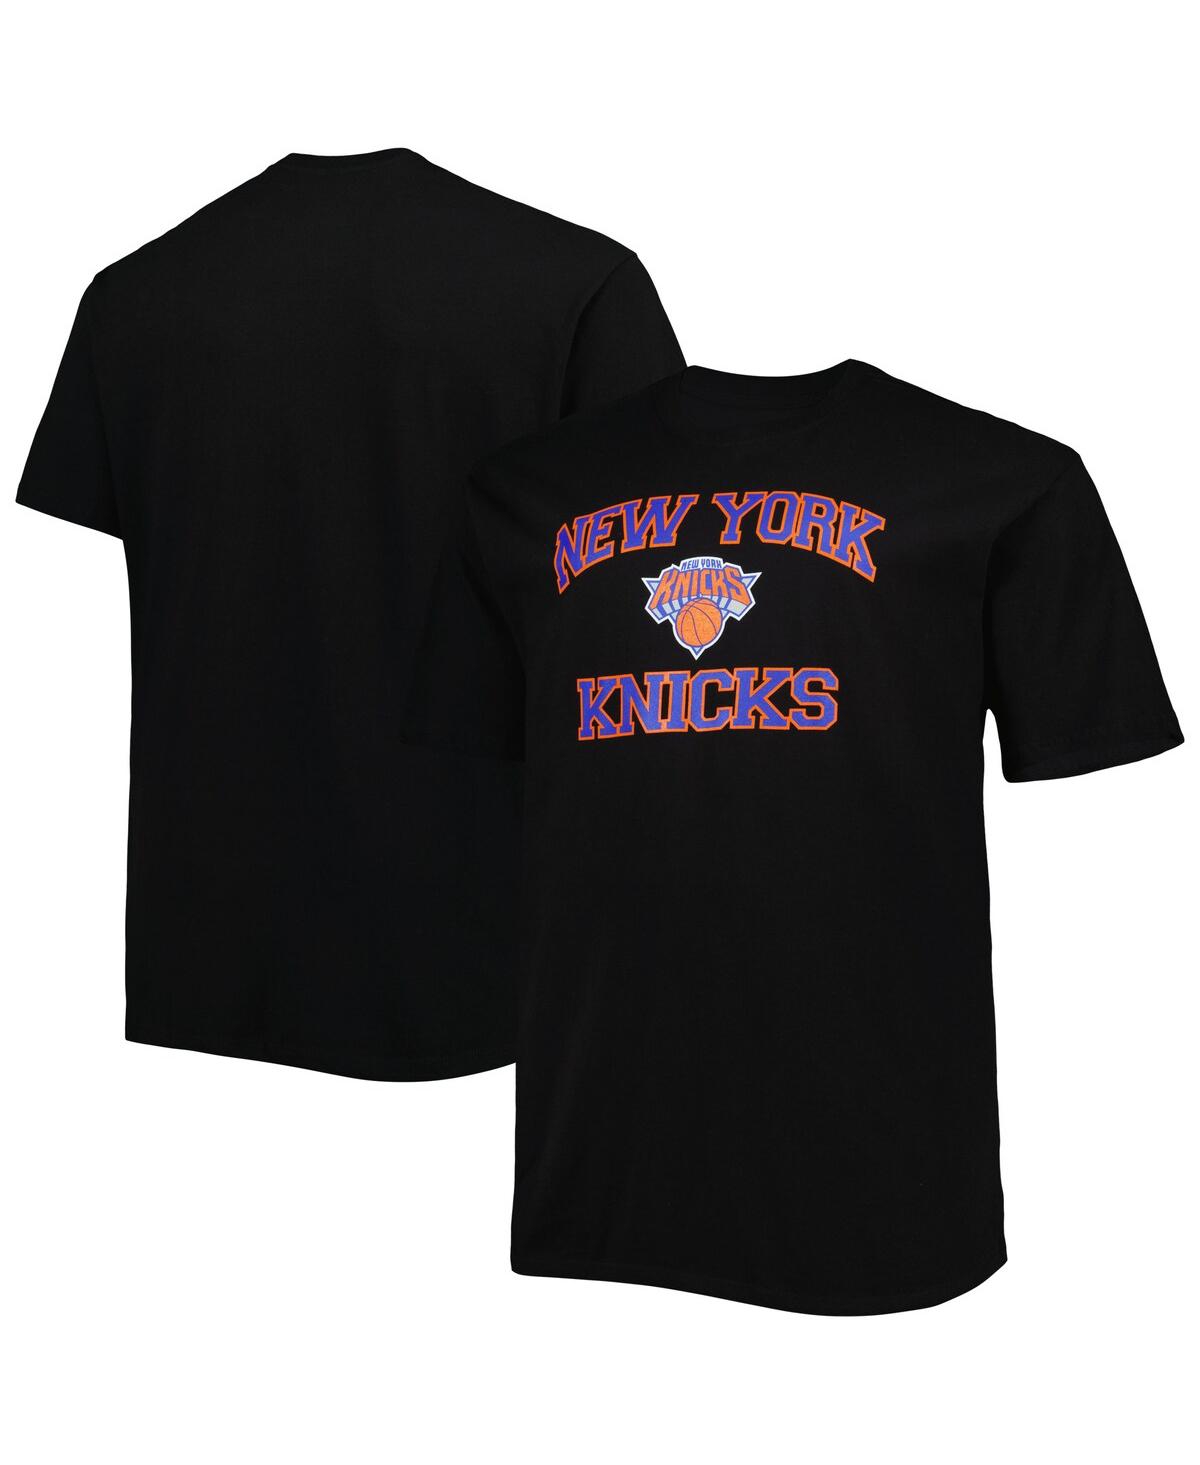 Men's Black New York Knicks Big and Tall Heart and Soul T-shirt - Black